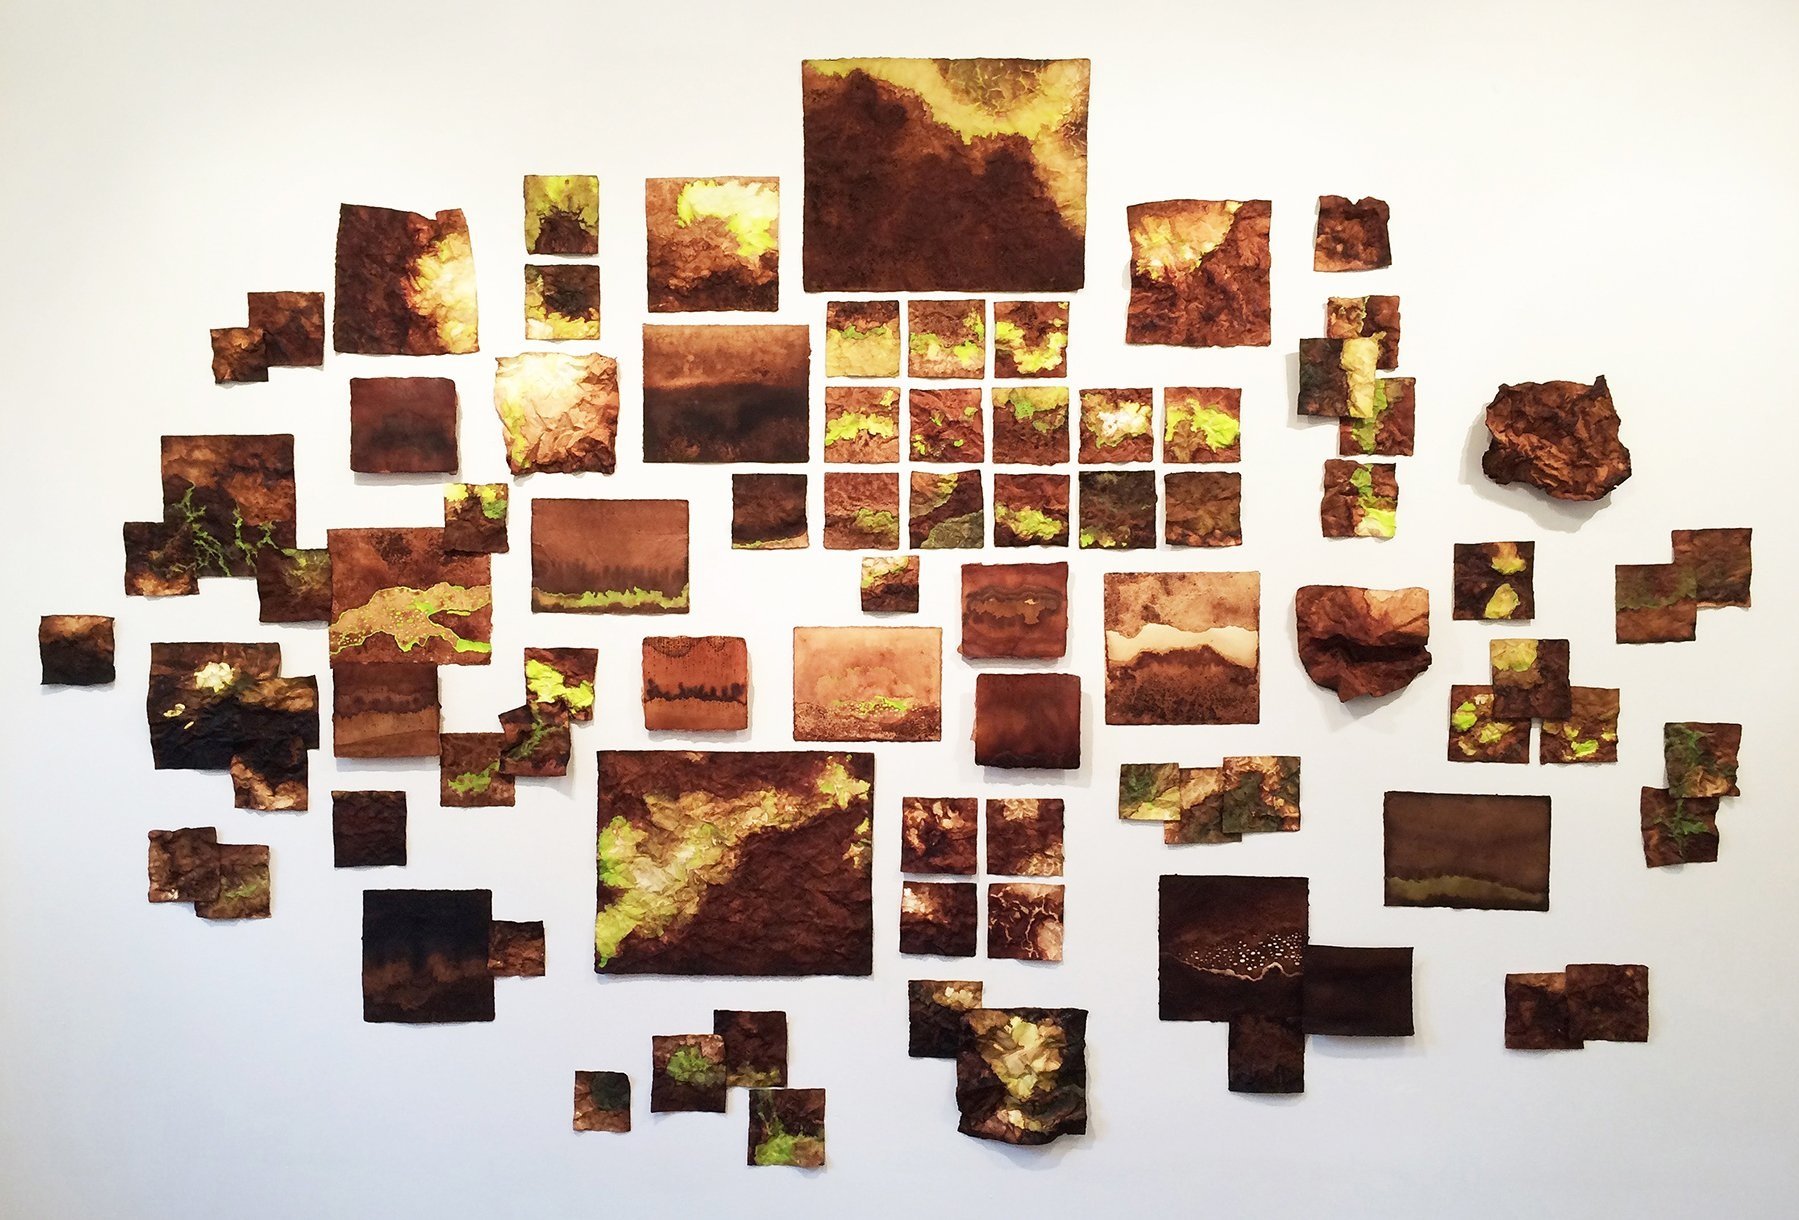    Beth Dary,    “Bloom (installation)”,Egg tempera, tea, rust and encaustic on handmade paper, 5'h x 8'w x 1/2"d, 2015/2016, $5,500.00     